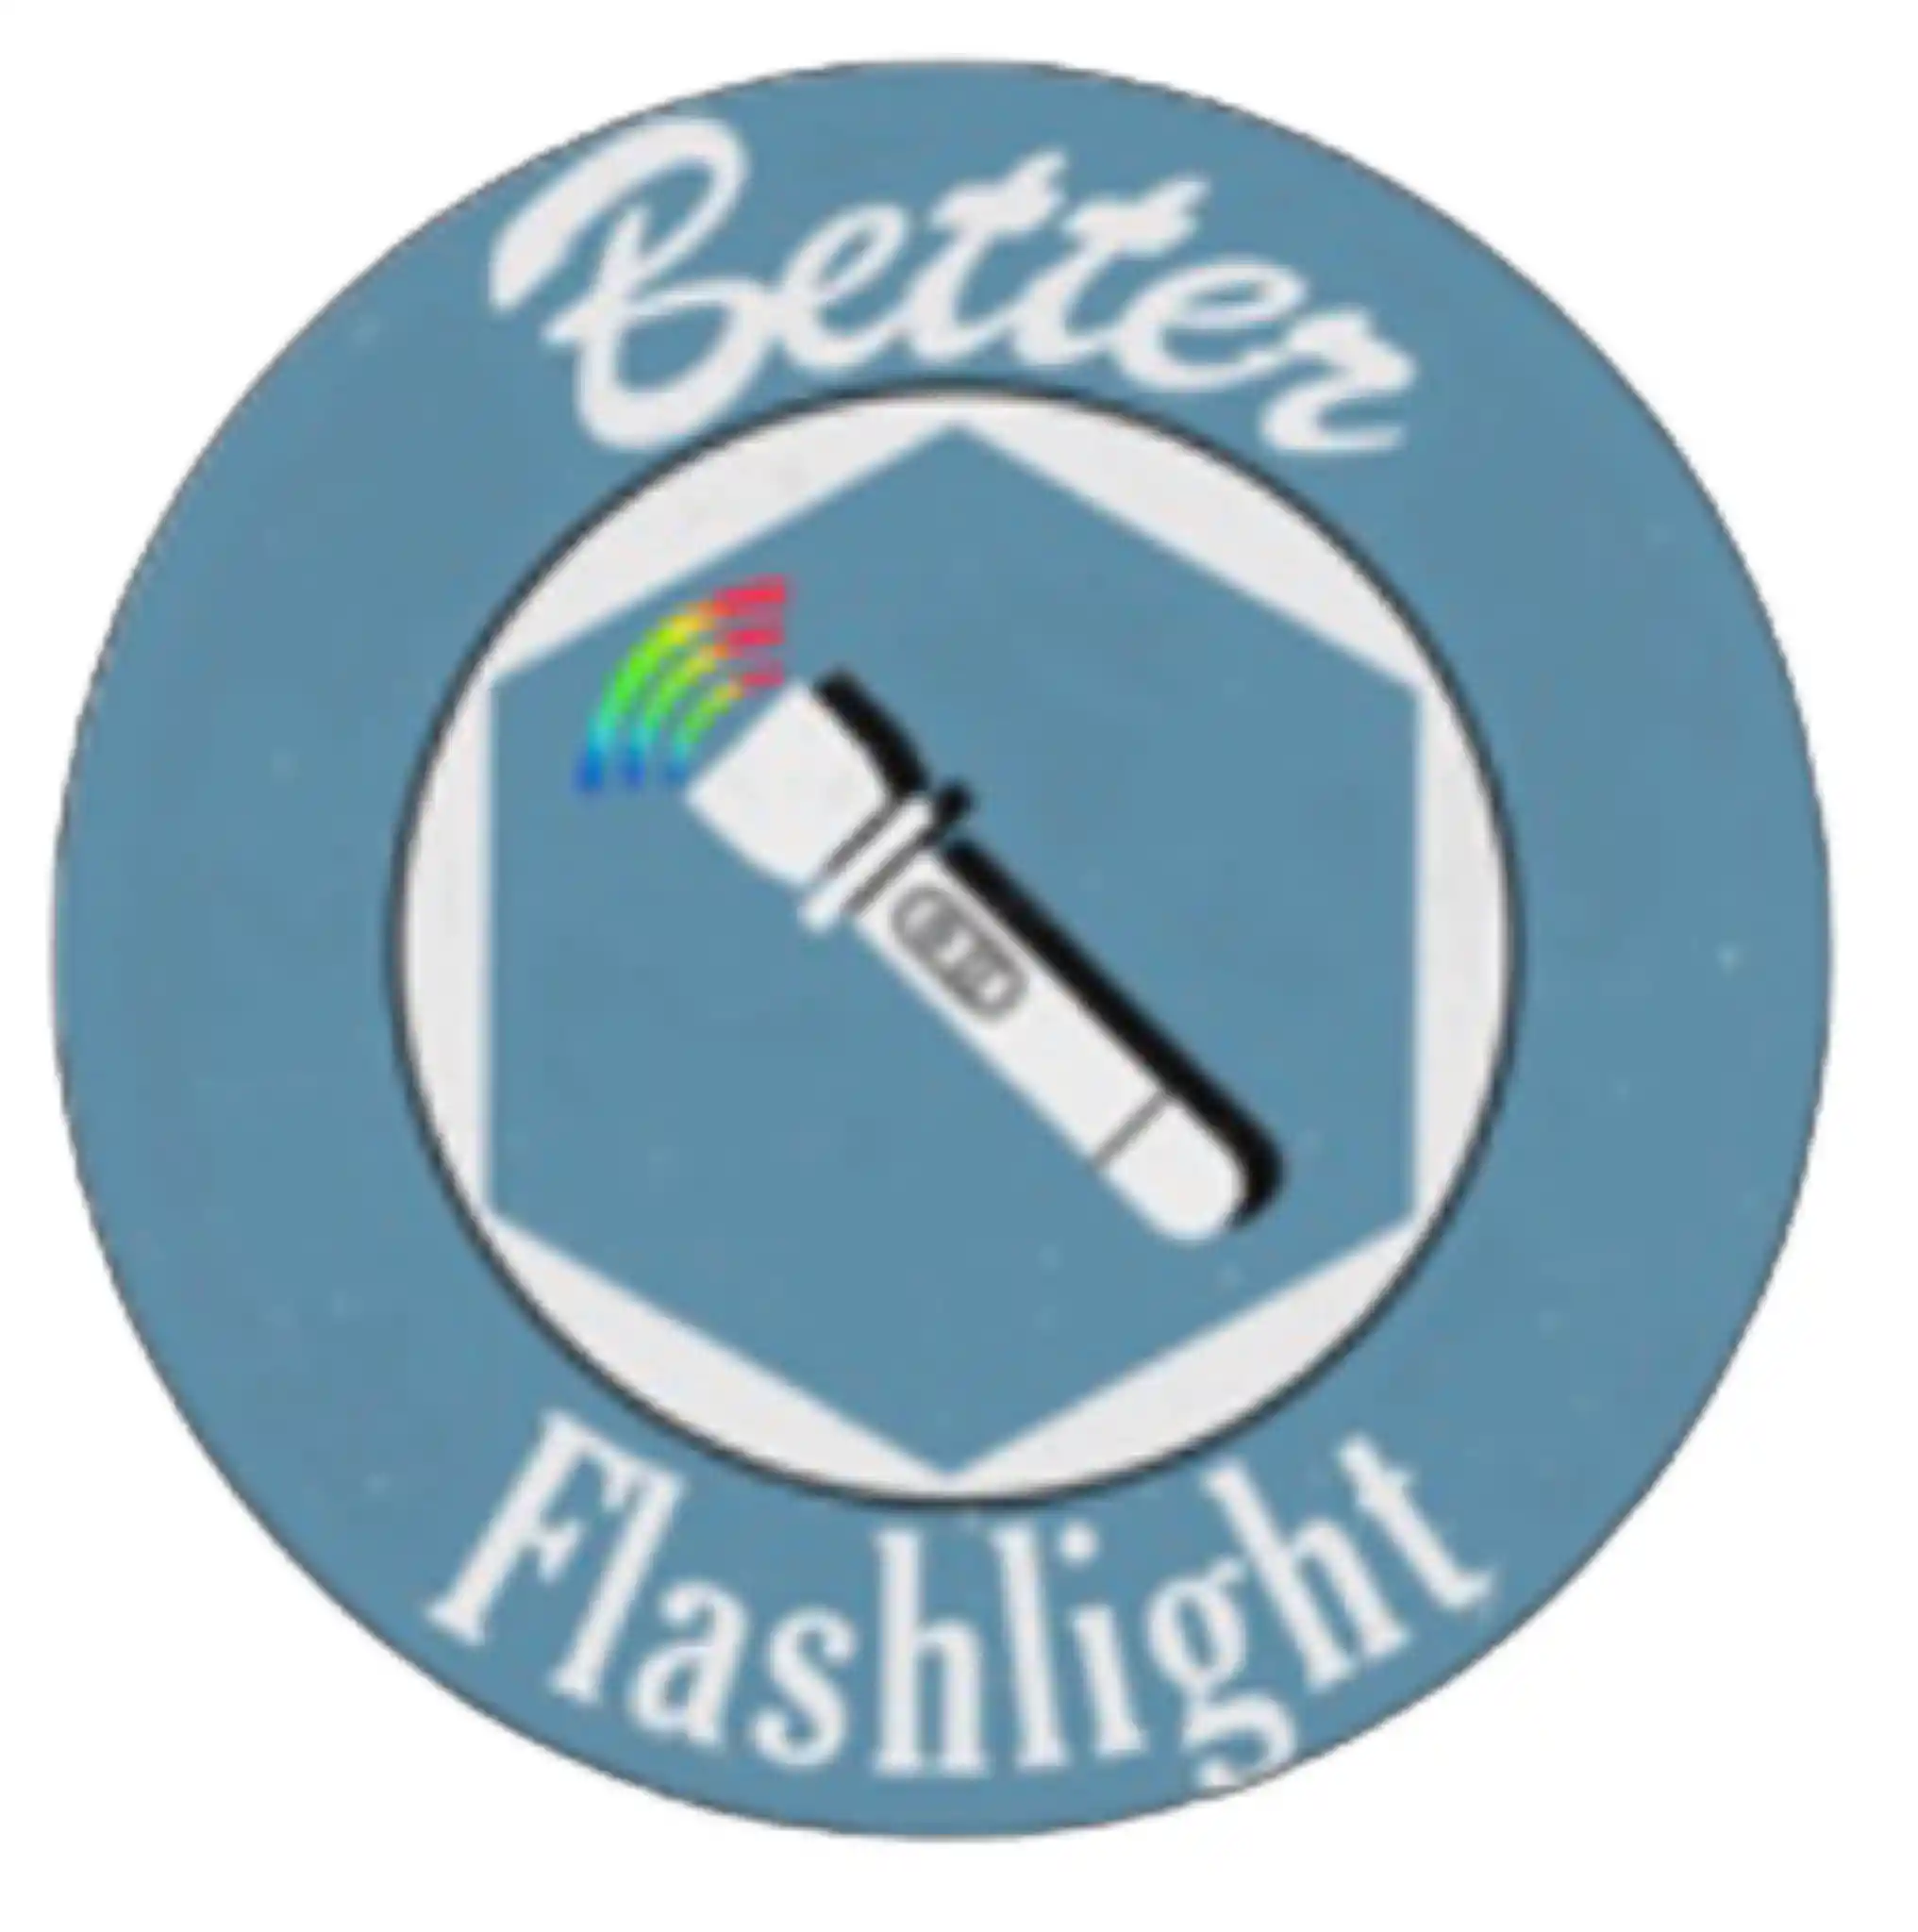 better flashlight icon.jpg